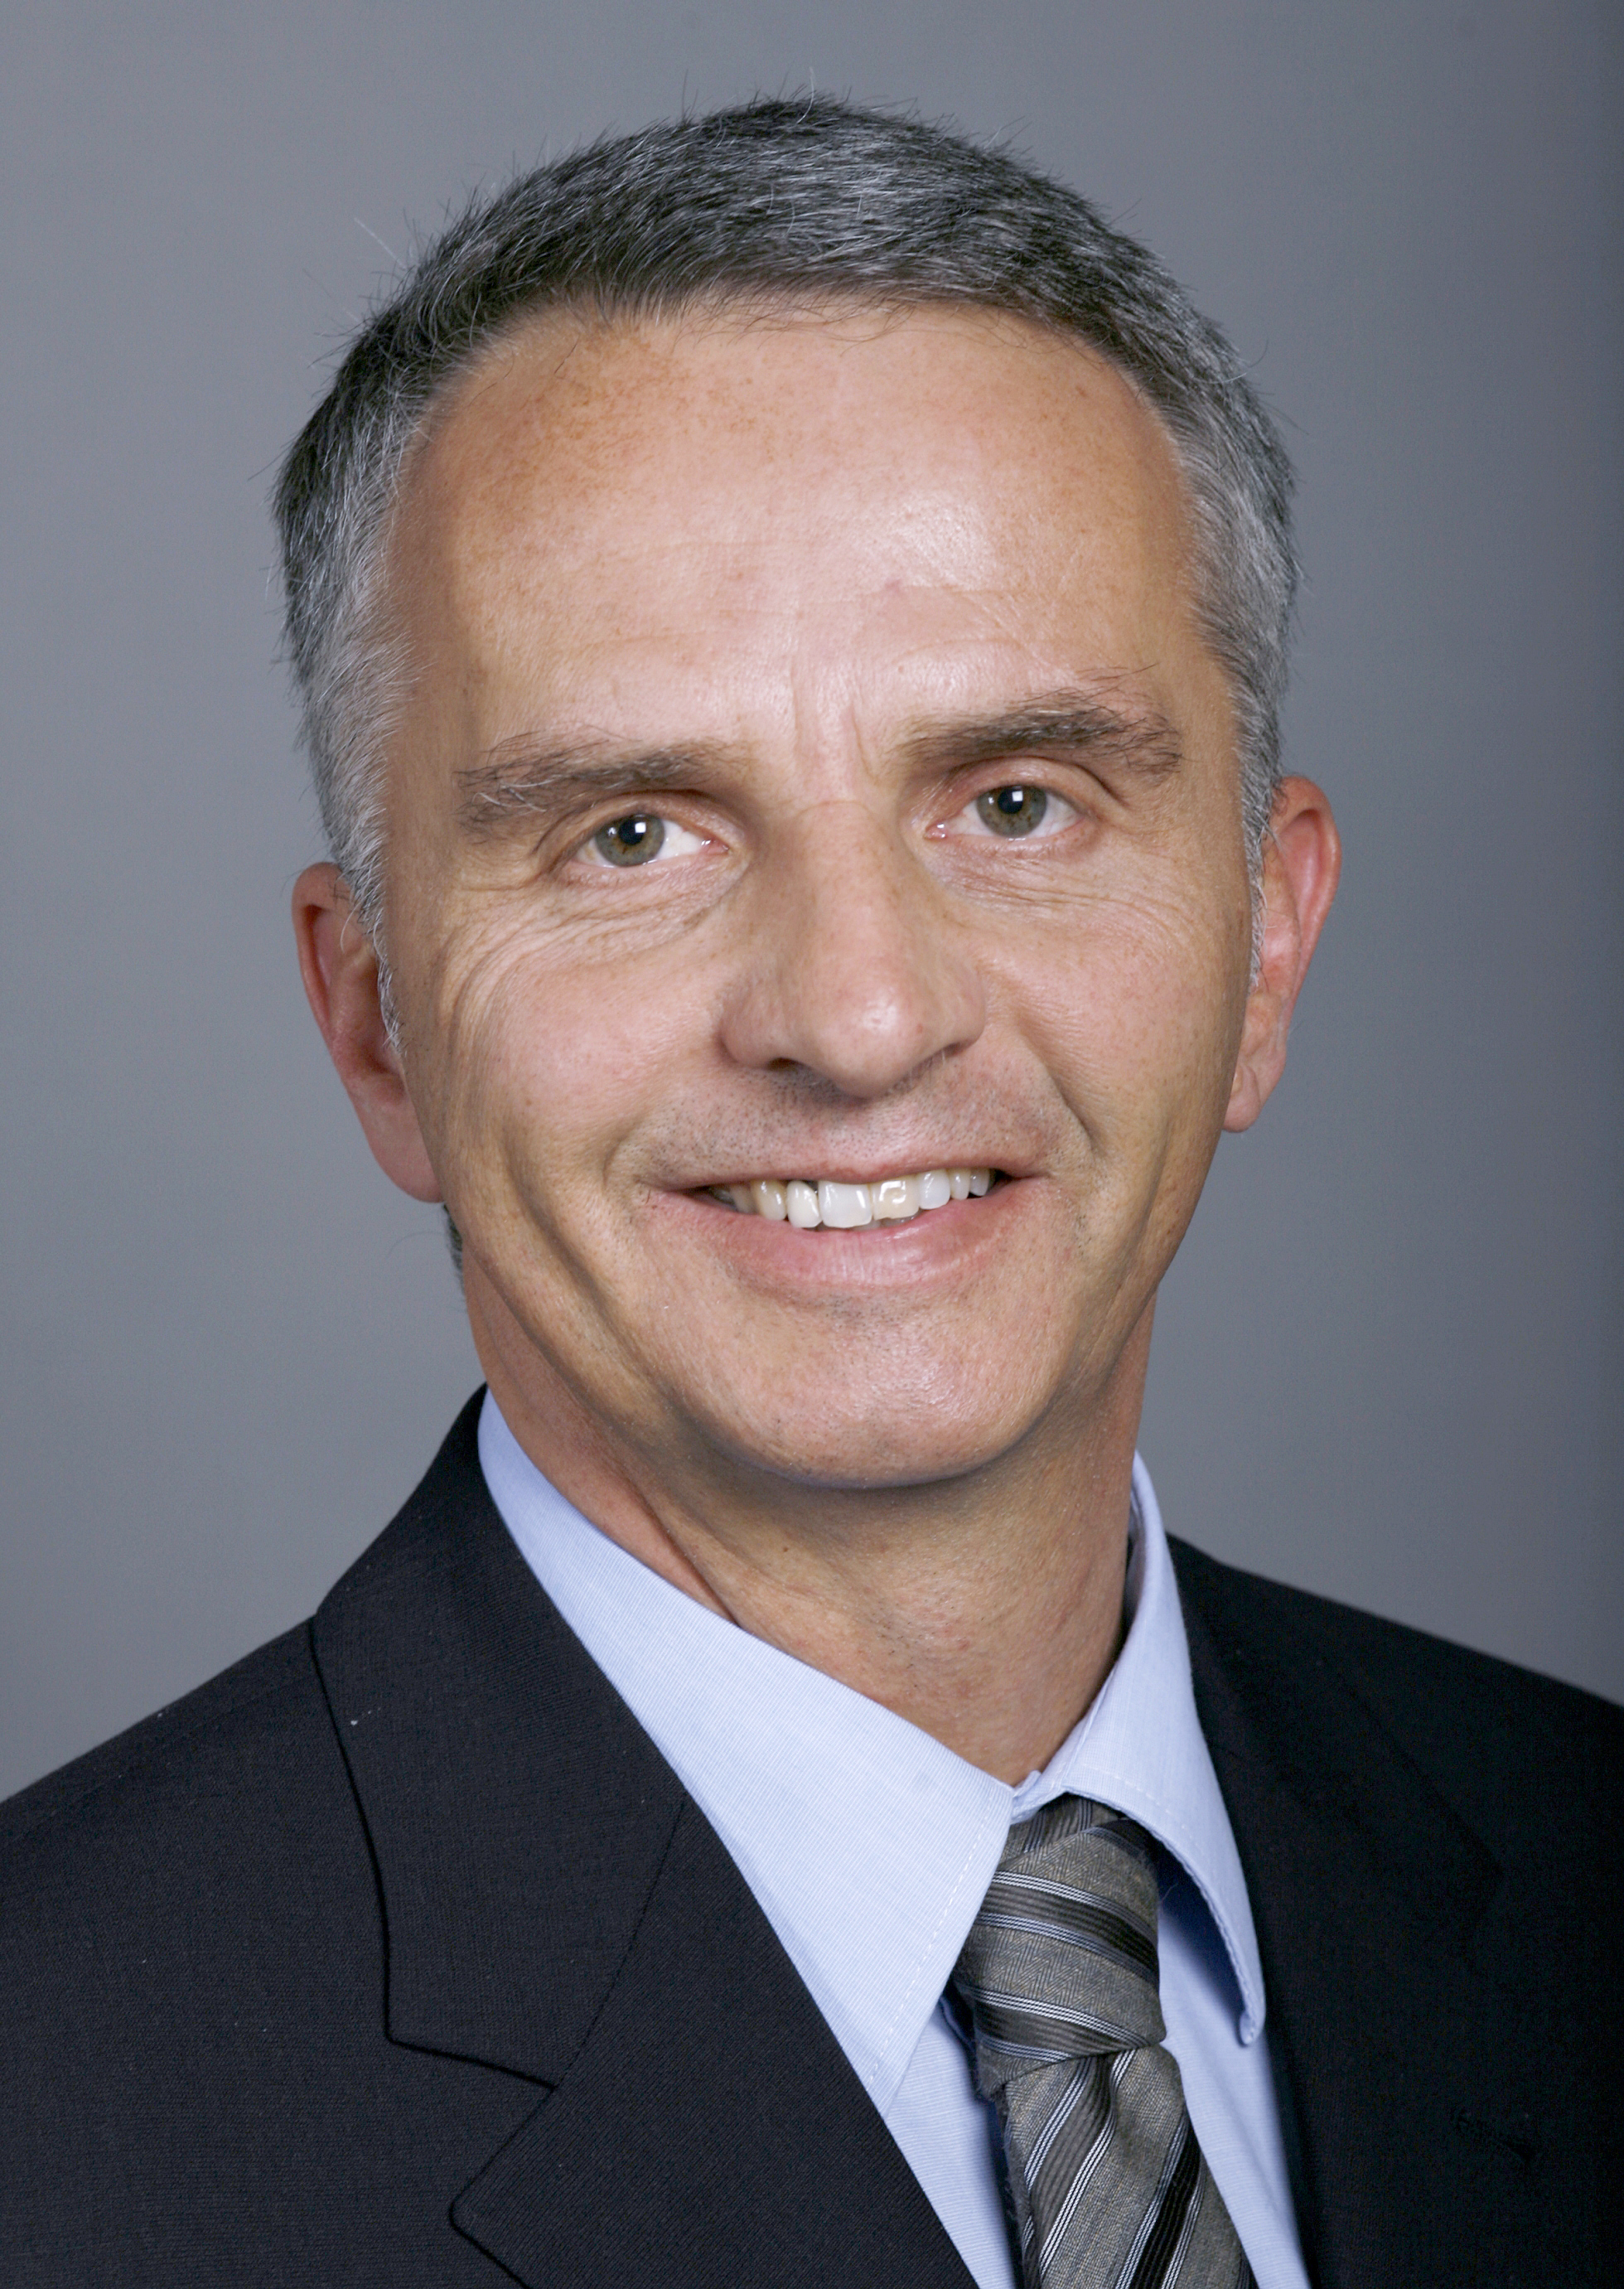 Didier Burkhalter (2007)